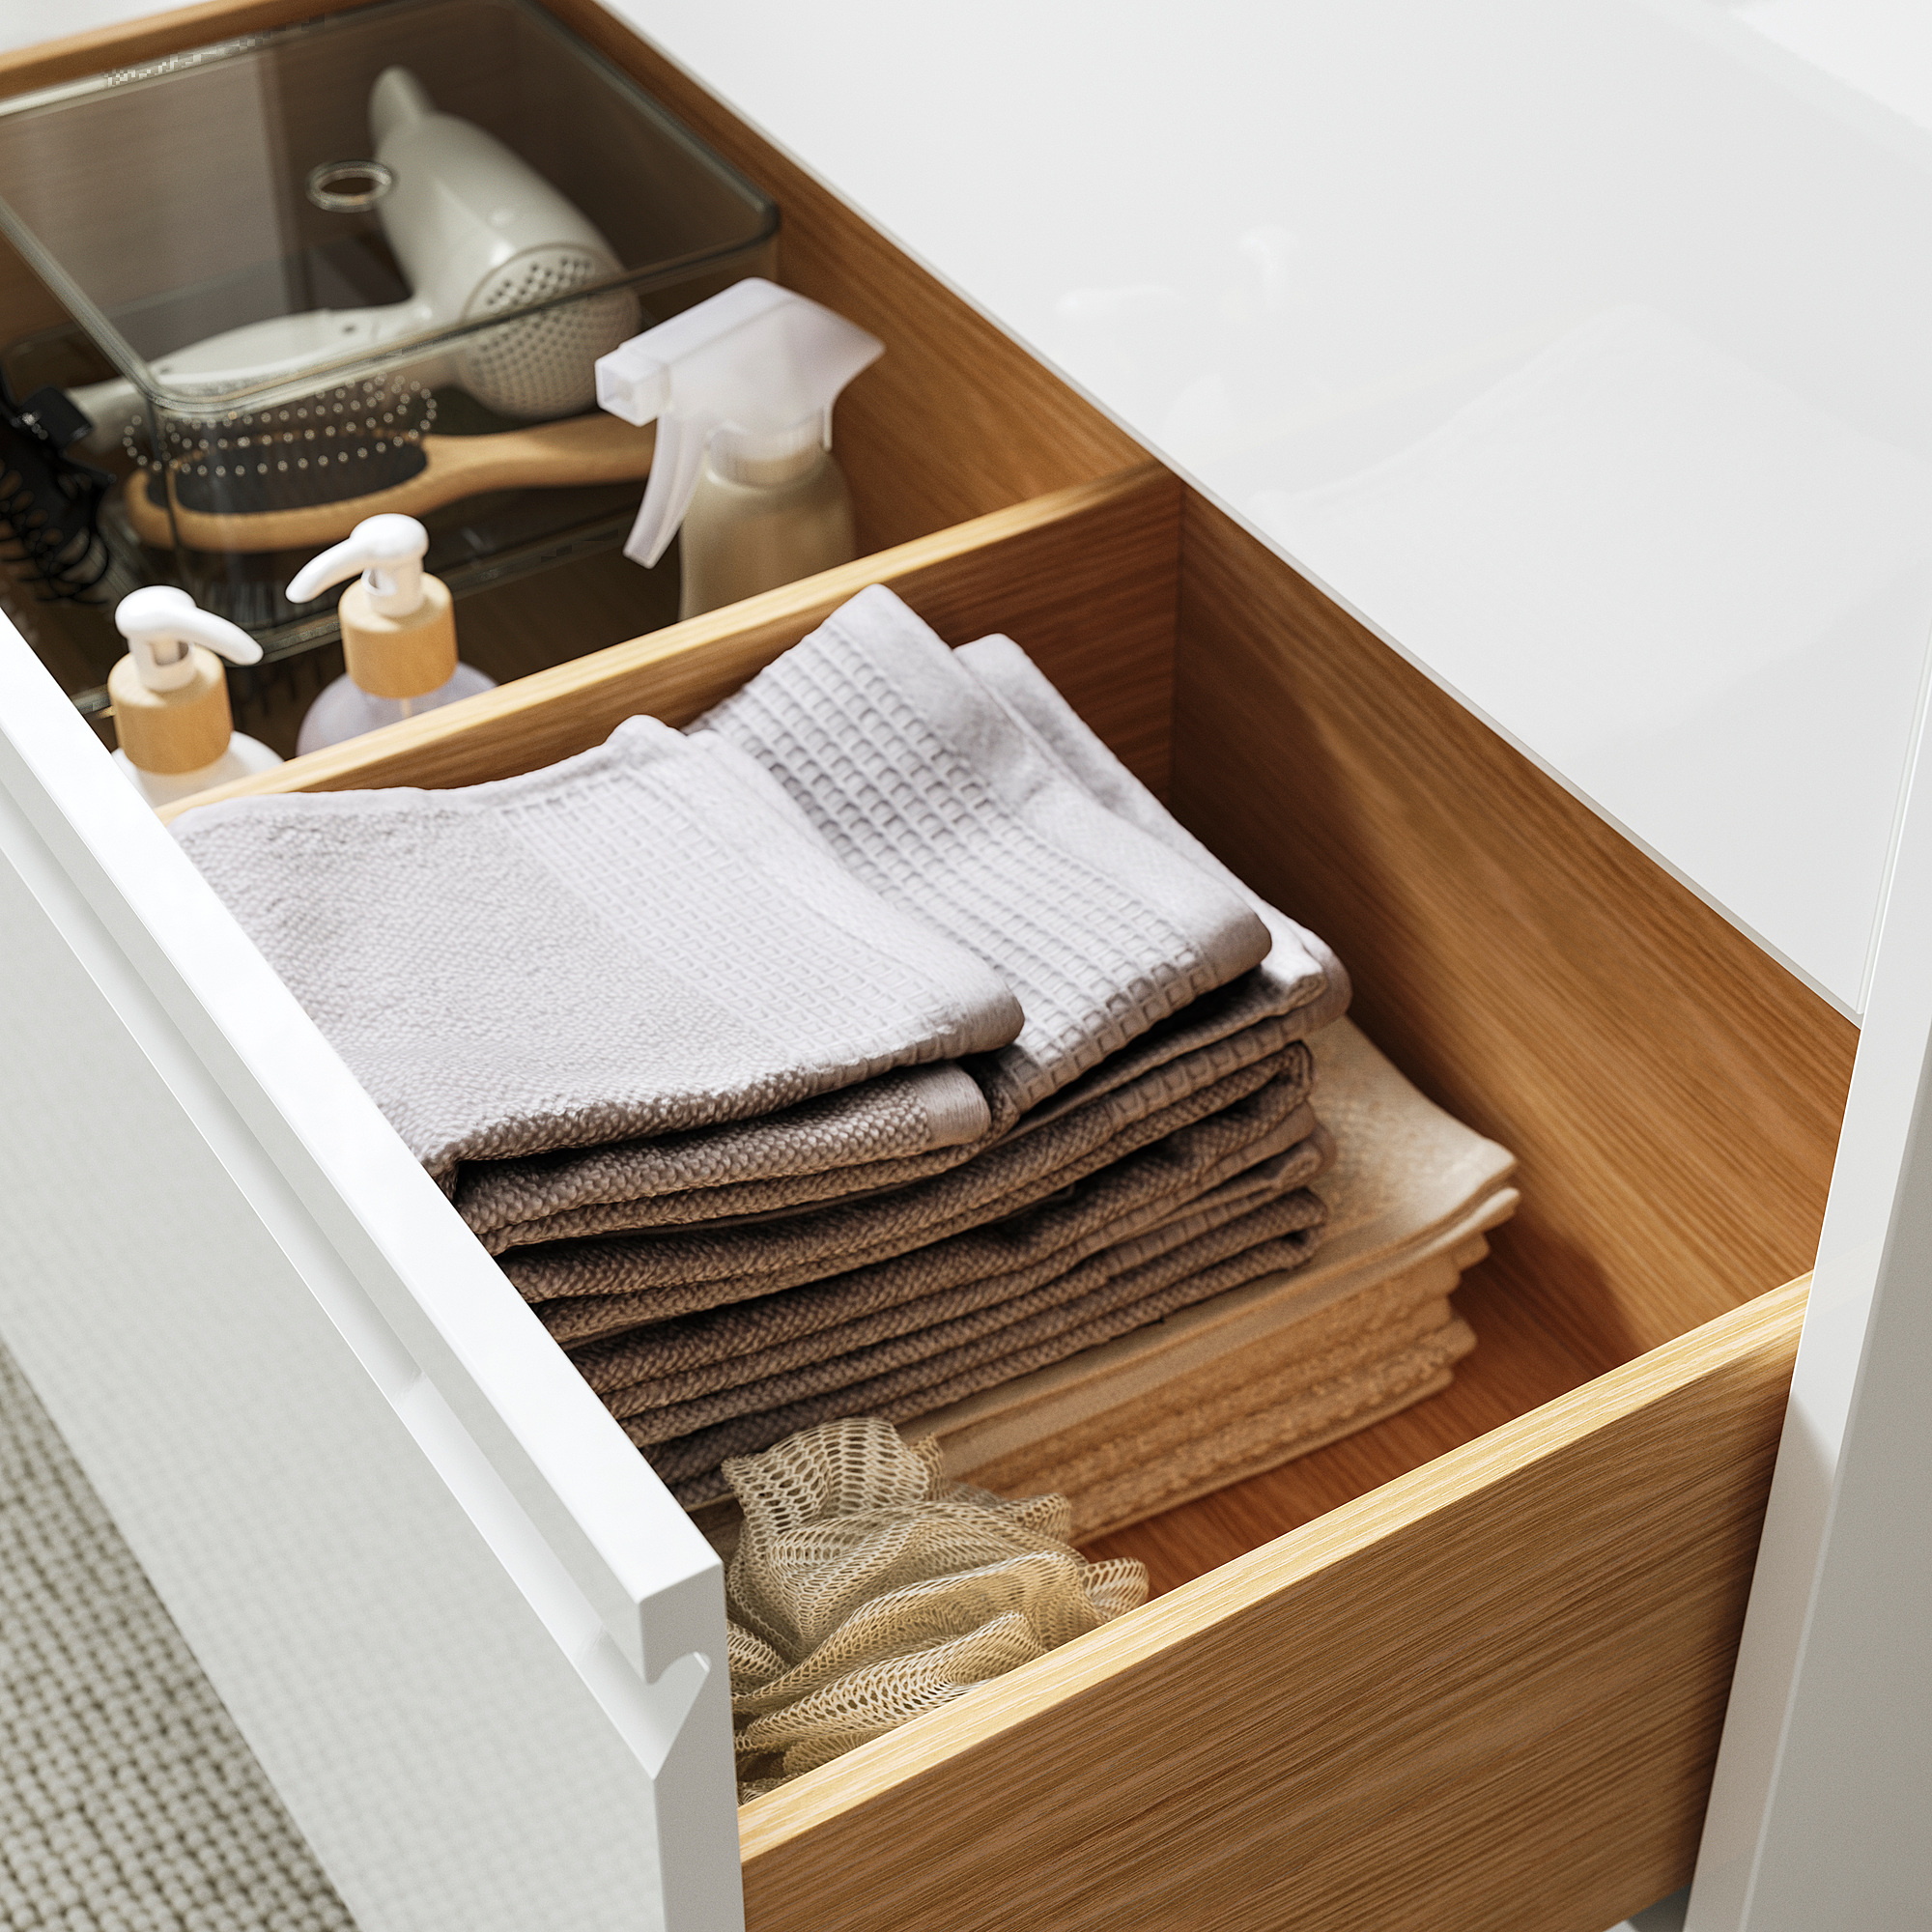 ÄNGSJÖN wash-stand with drawer